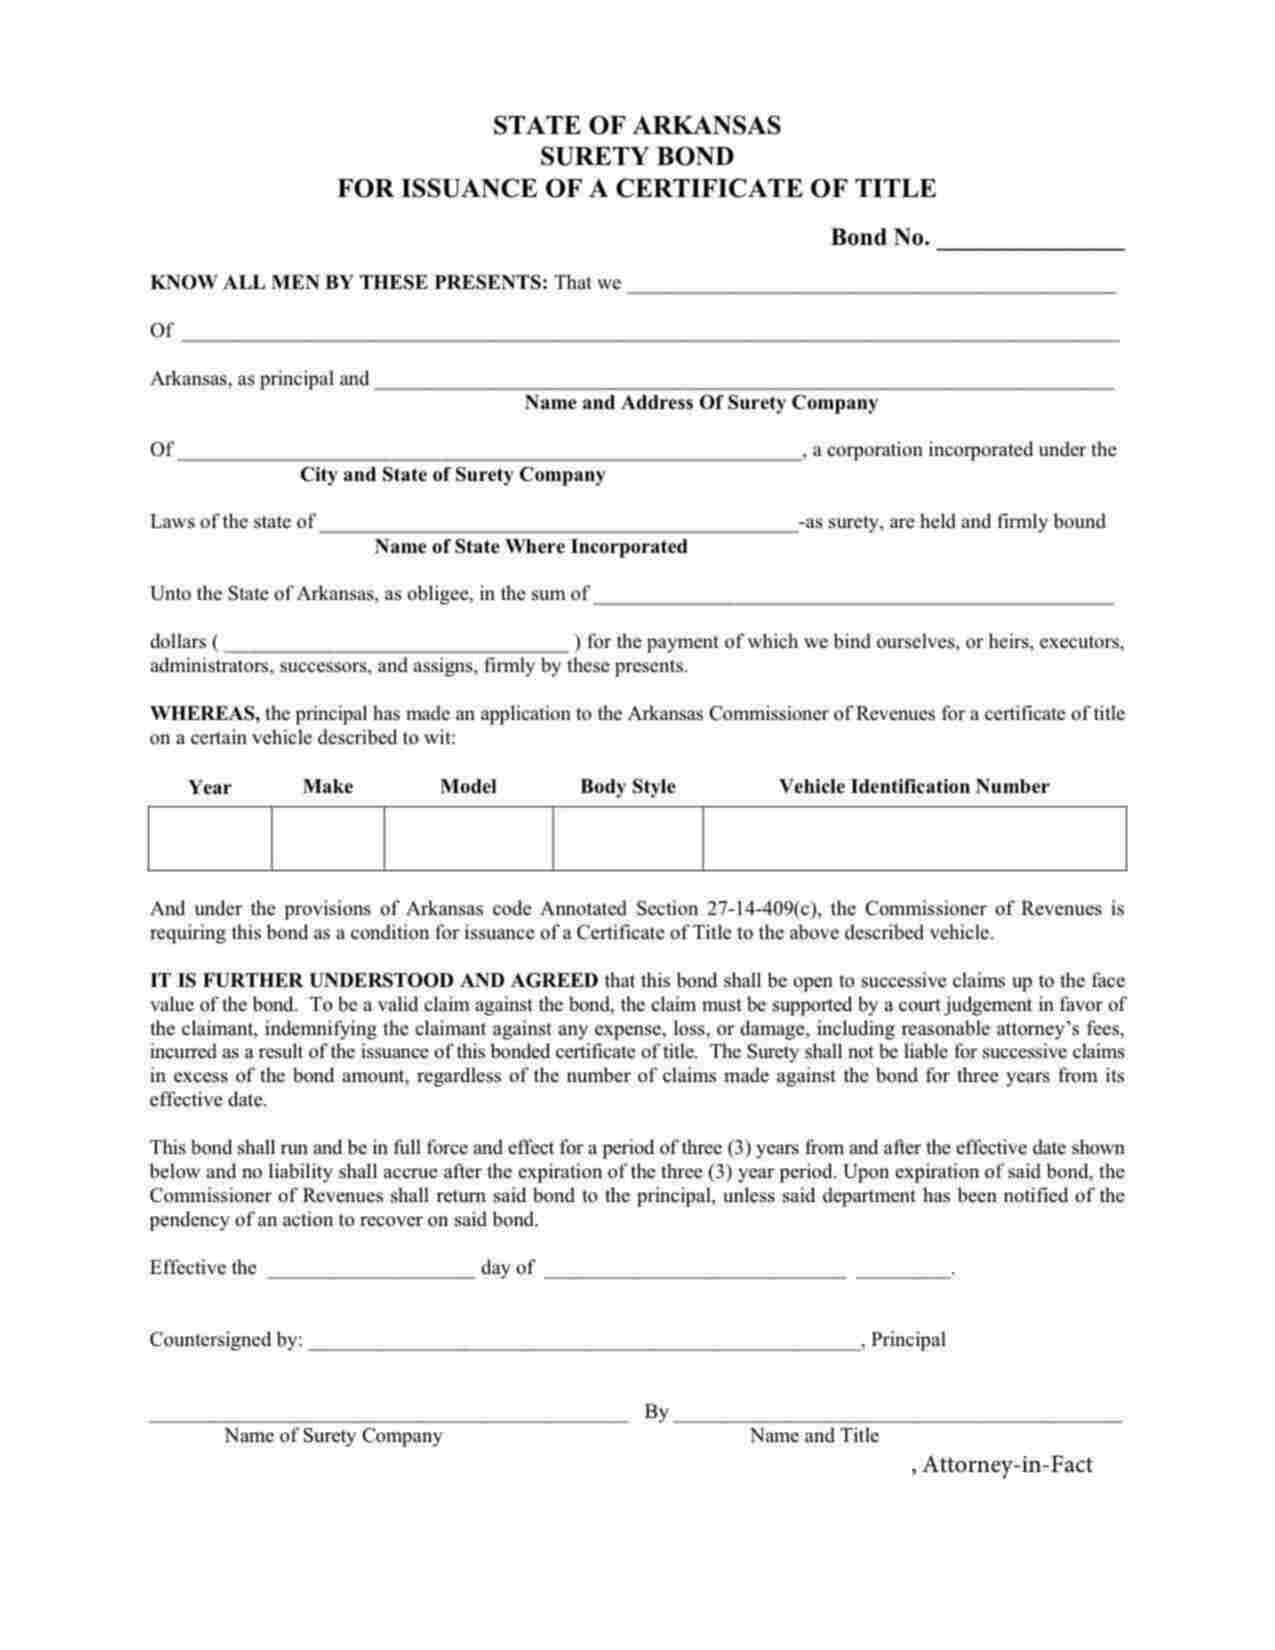 Arkansas Lost Certificate of Title Bond Form